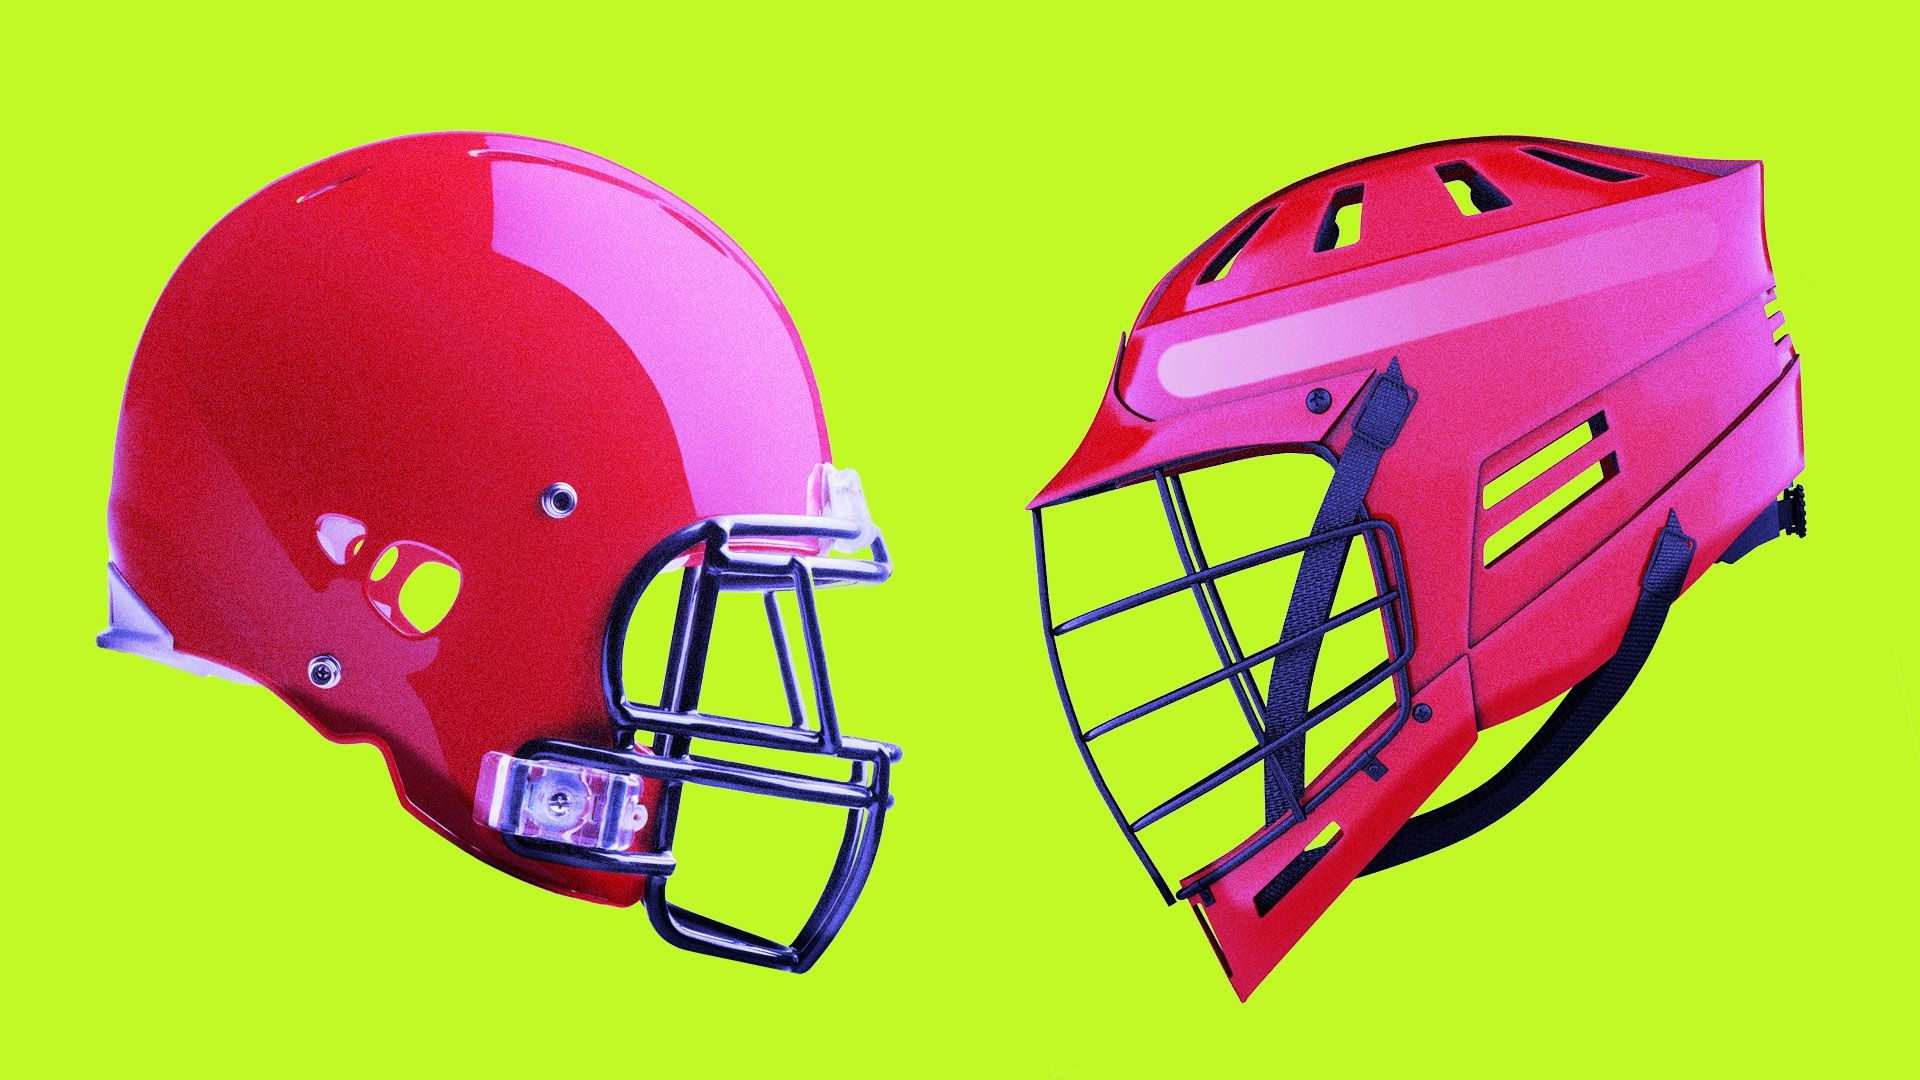 Illustration of a football helmet facing a lacrosse helmet